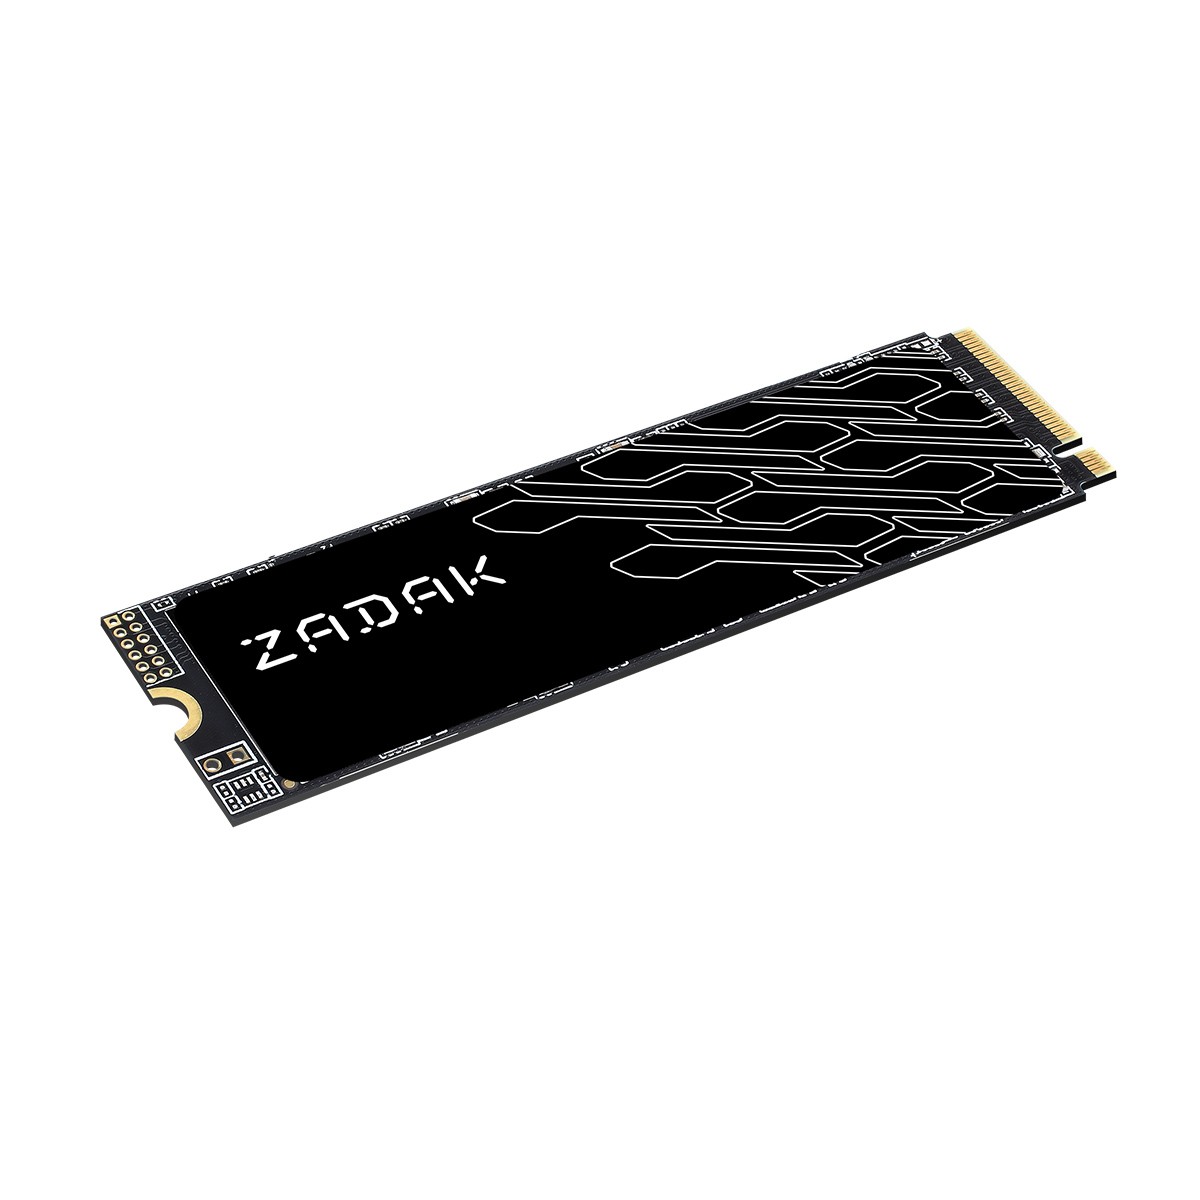 SSD Zadak TWSG3 512GB, PCIe Gen 3x4 M.2 NVMe, Leitura 3400MBs e Gravação 2400MBs, ZS512GTWSG3-1